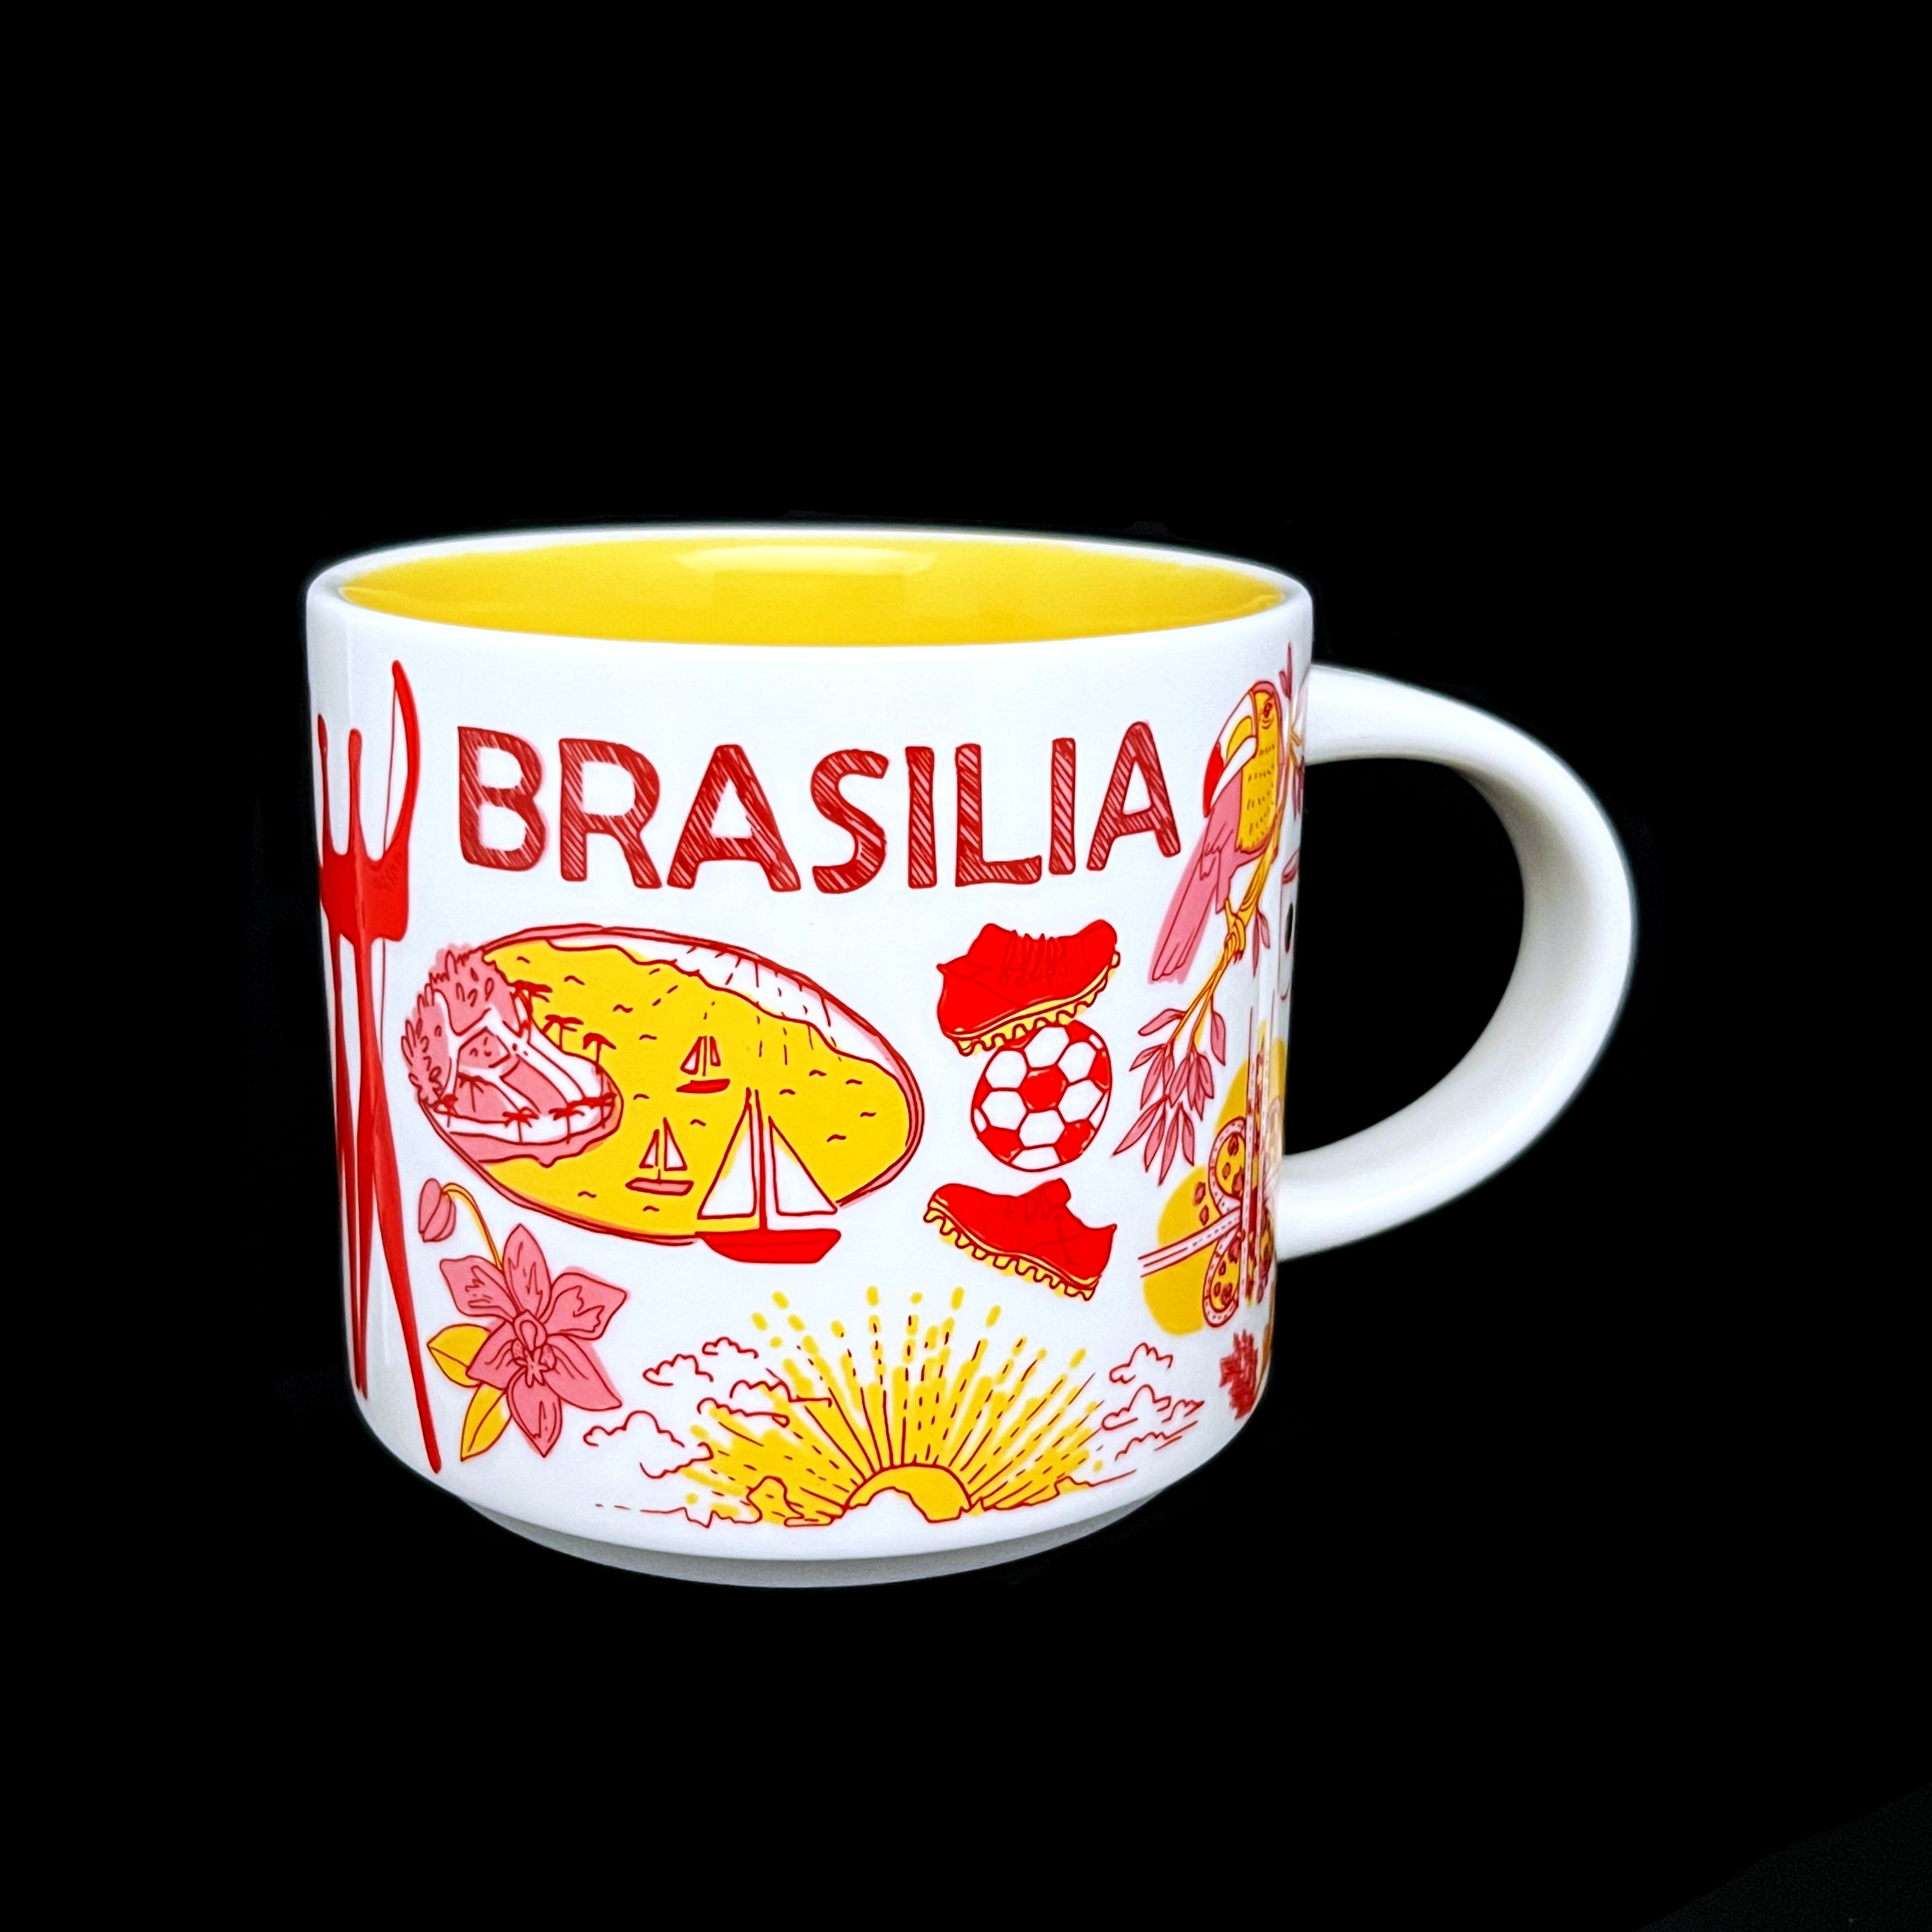 Starbucks Coffee Kaffee Tasse Tee Becher Bilder Motive Collectibles Cup Mug, Brasilia, Brasilien, Brazil